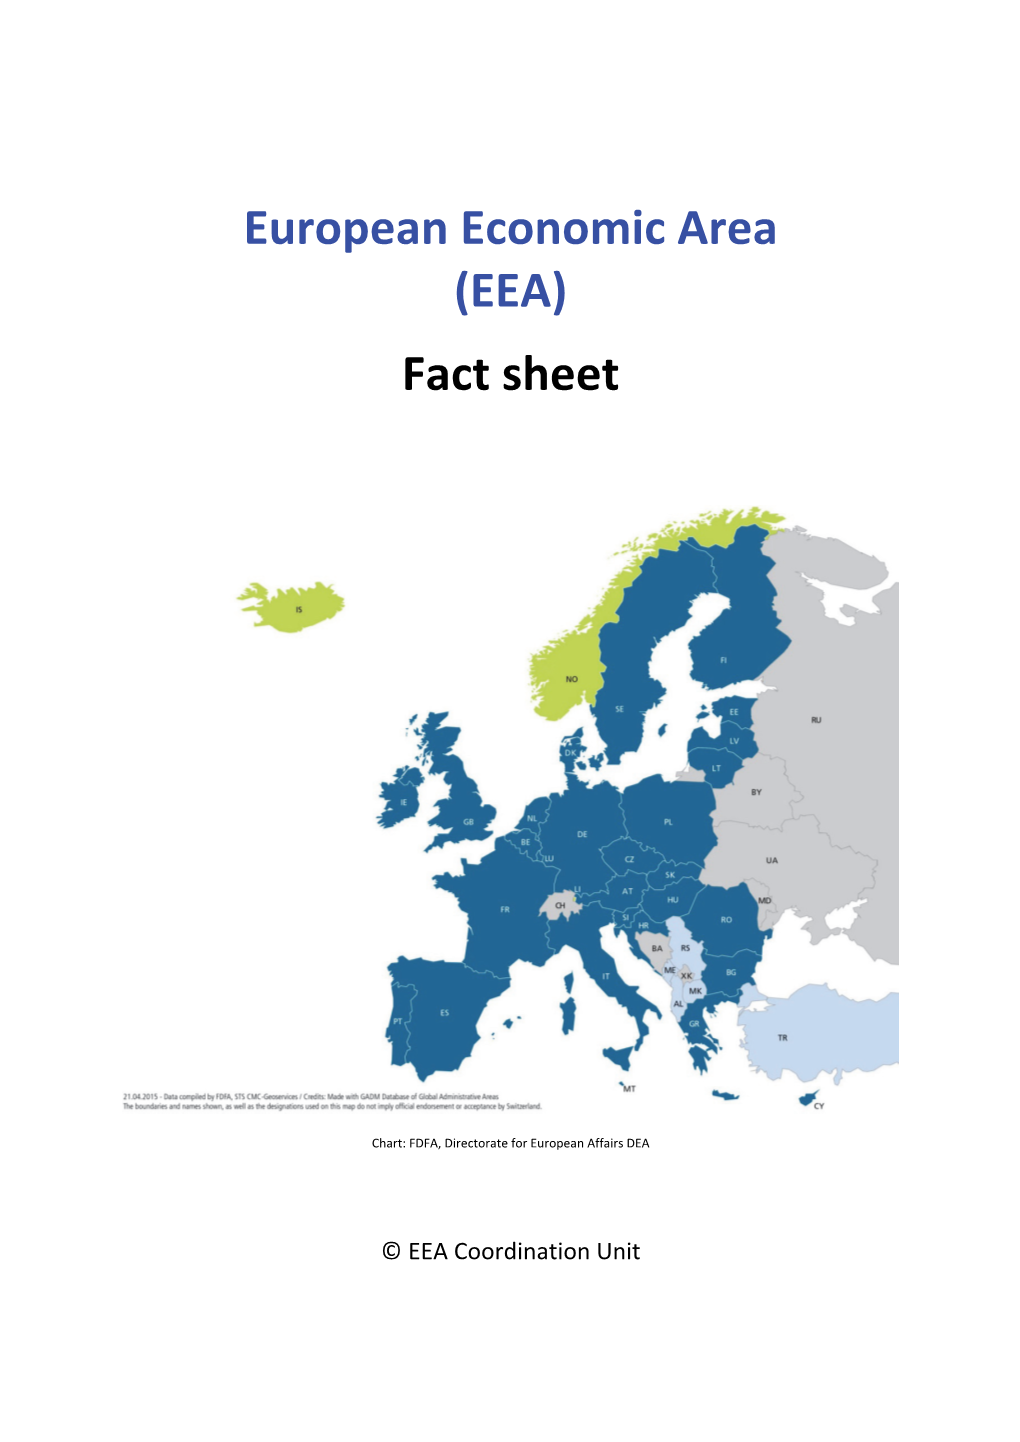 European Economic Area (EEA) Fact Sheet